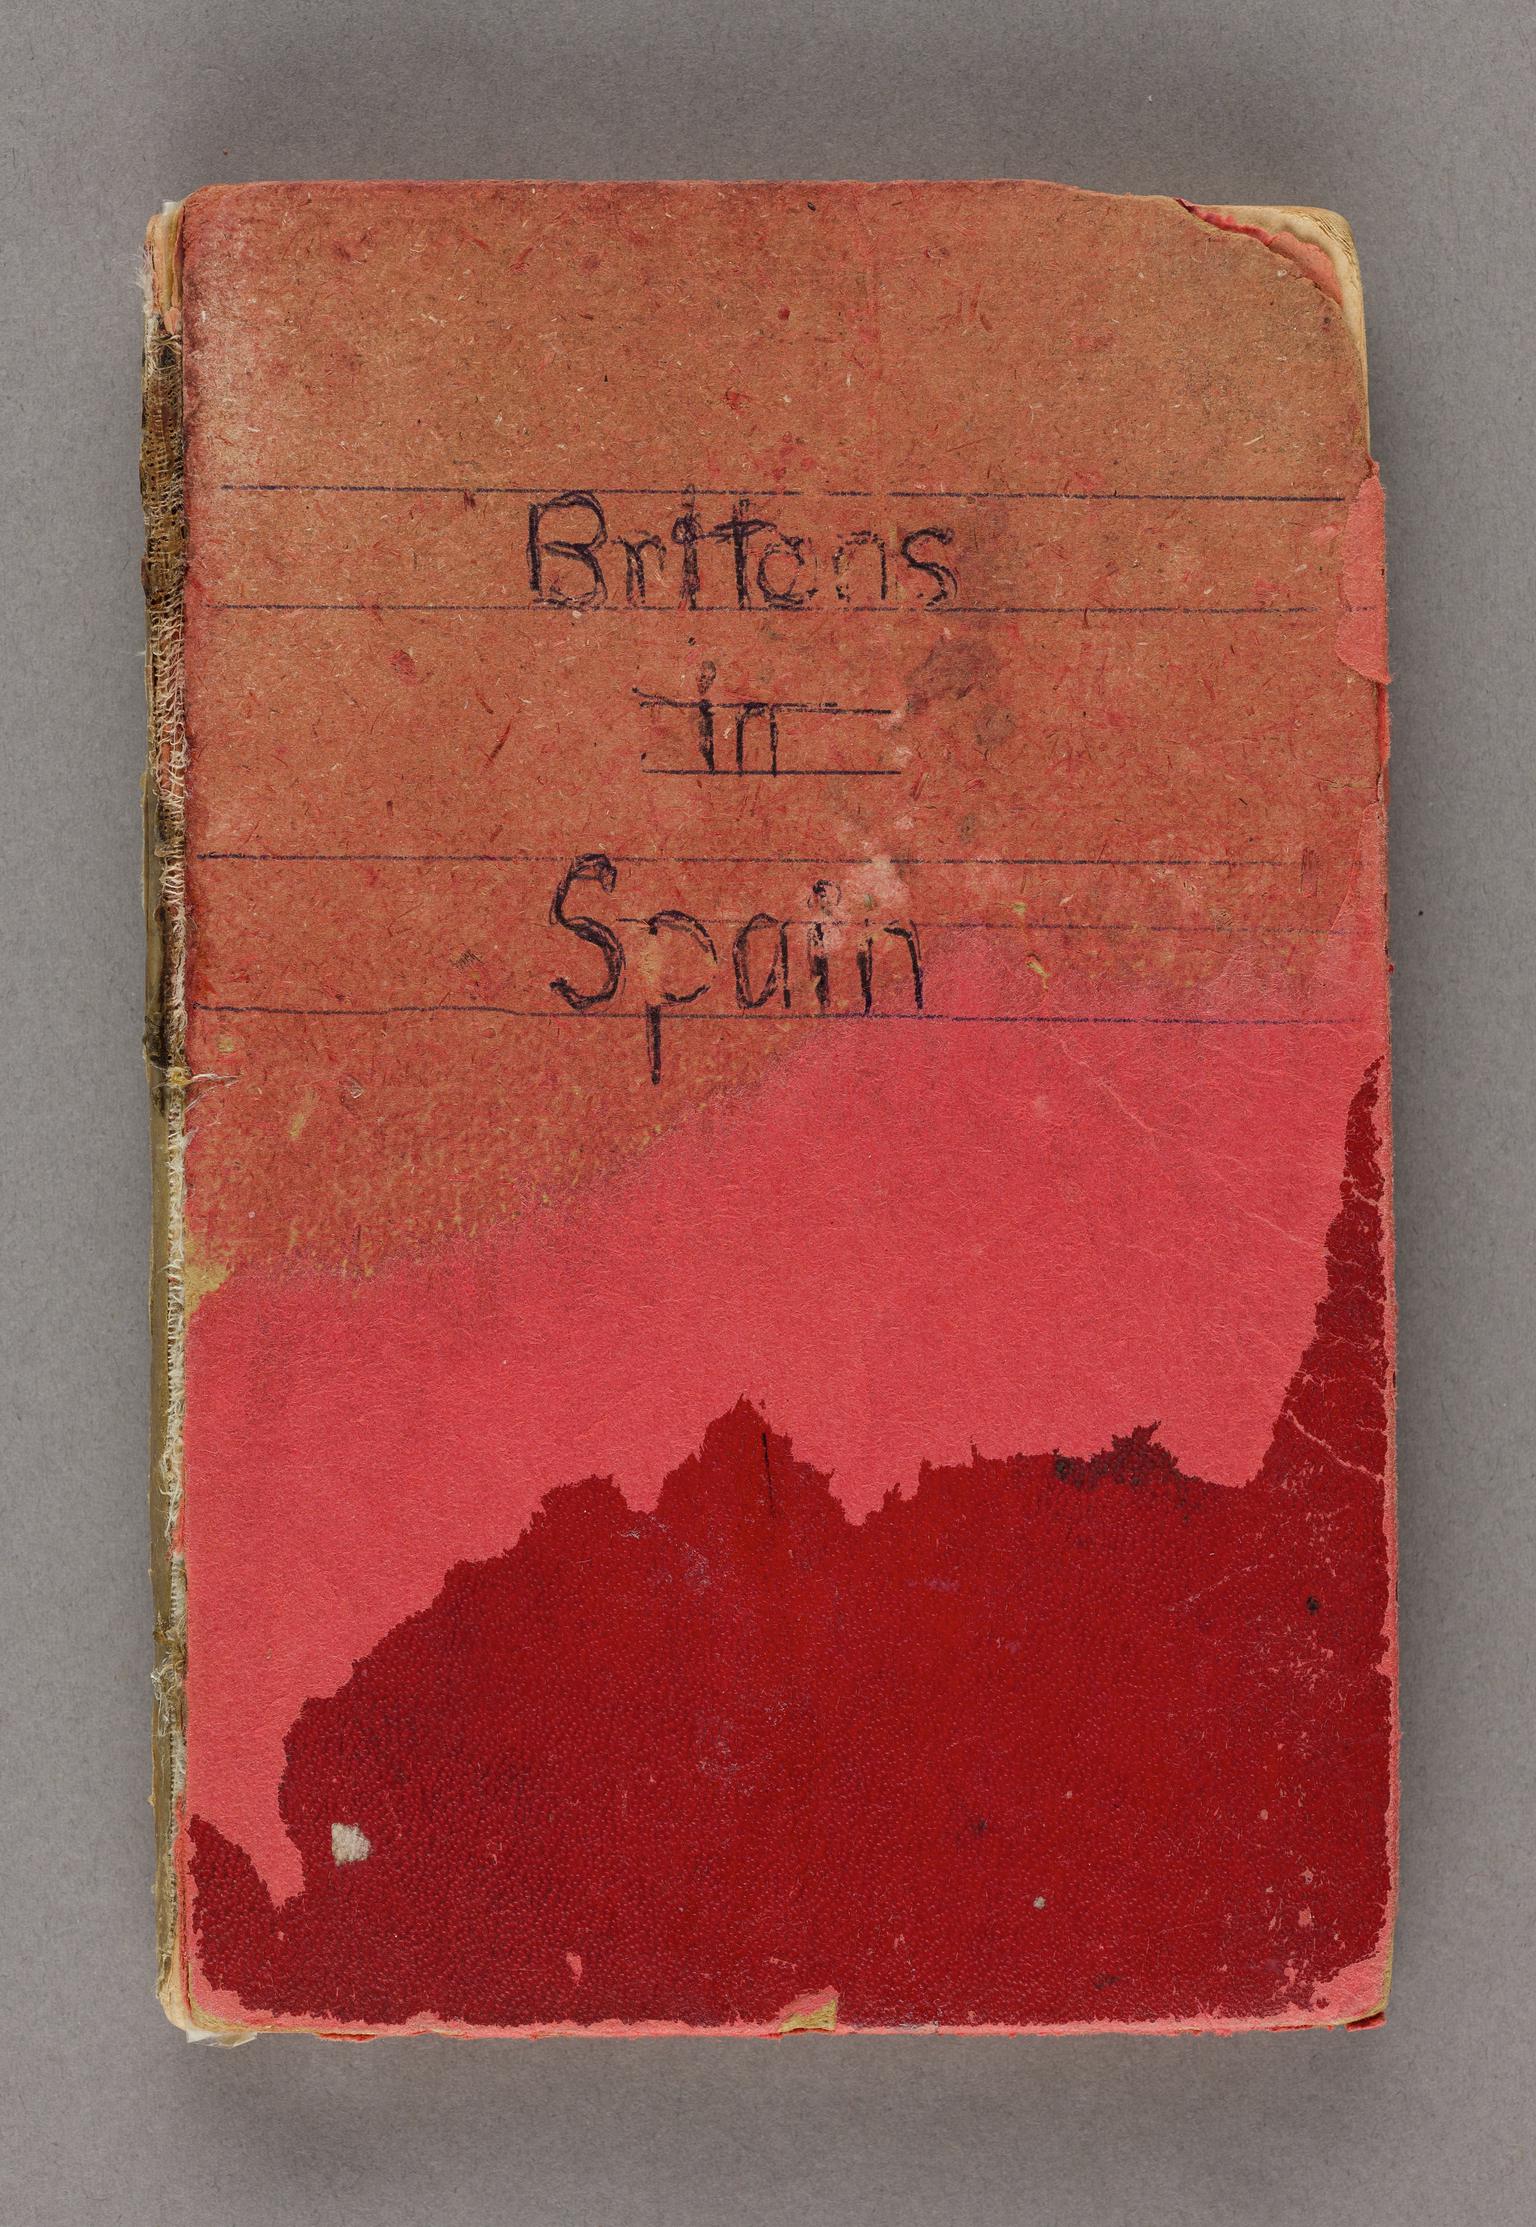 Britons in Spain (book)